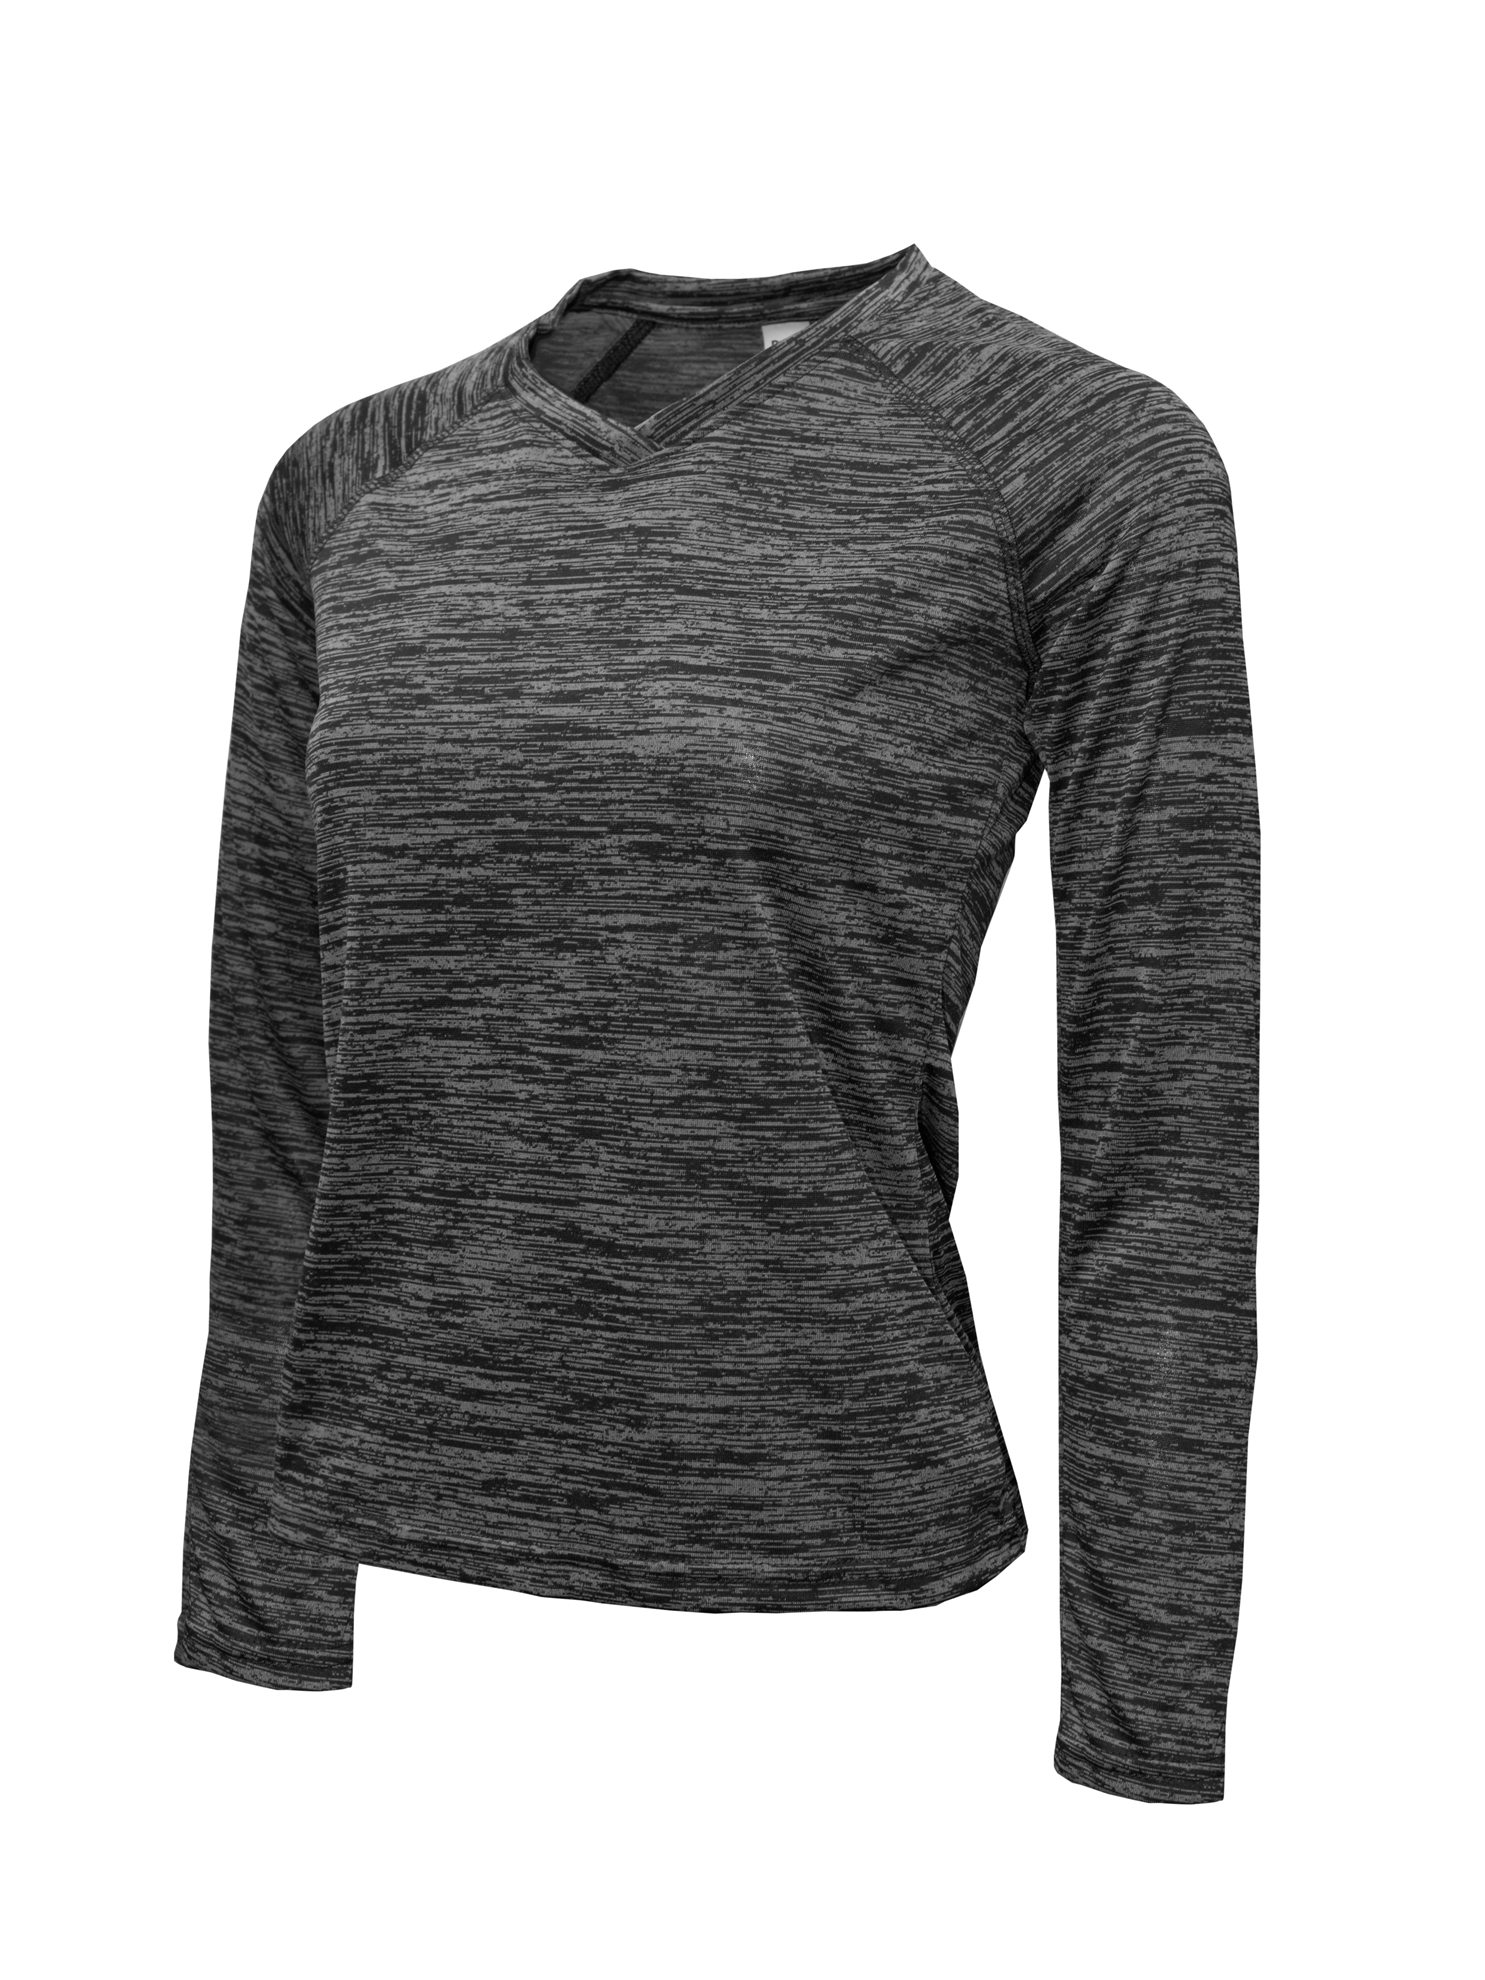 https://www.nyfifth.com/category/20220718/baw-athletic-wear-dt87-ladies-long-sleeve-dry-tek-v-neck-shirt_BLACK.jpeg